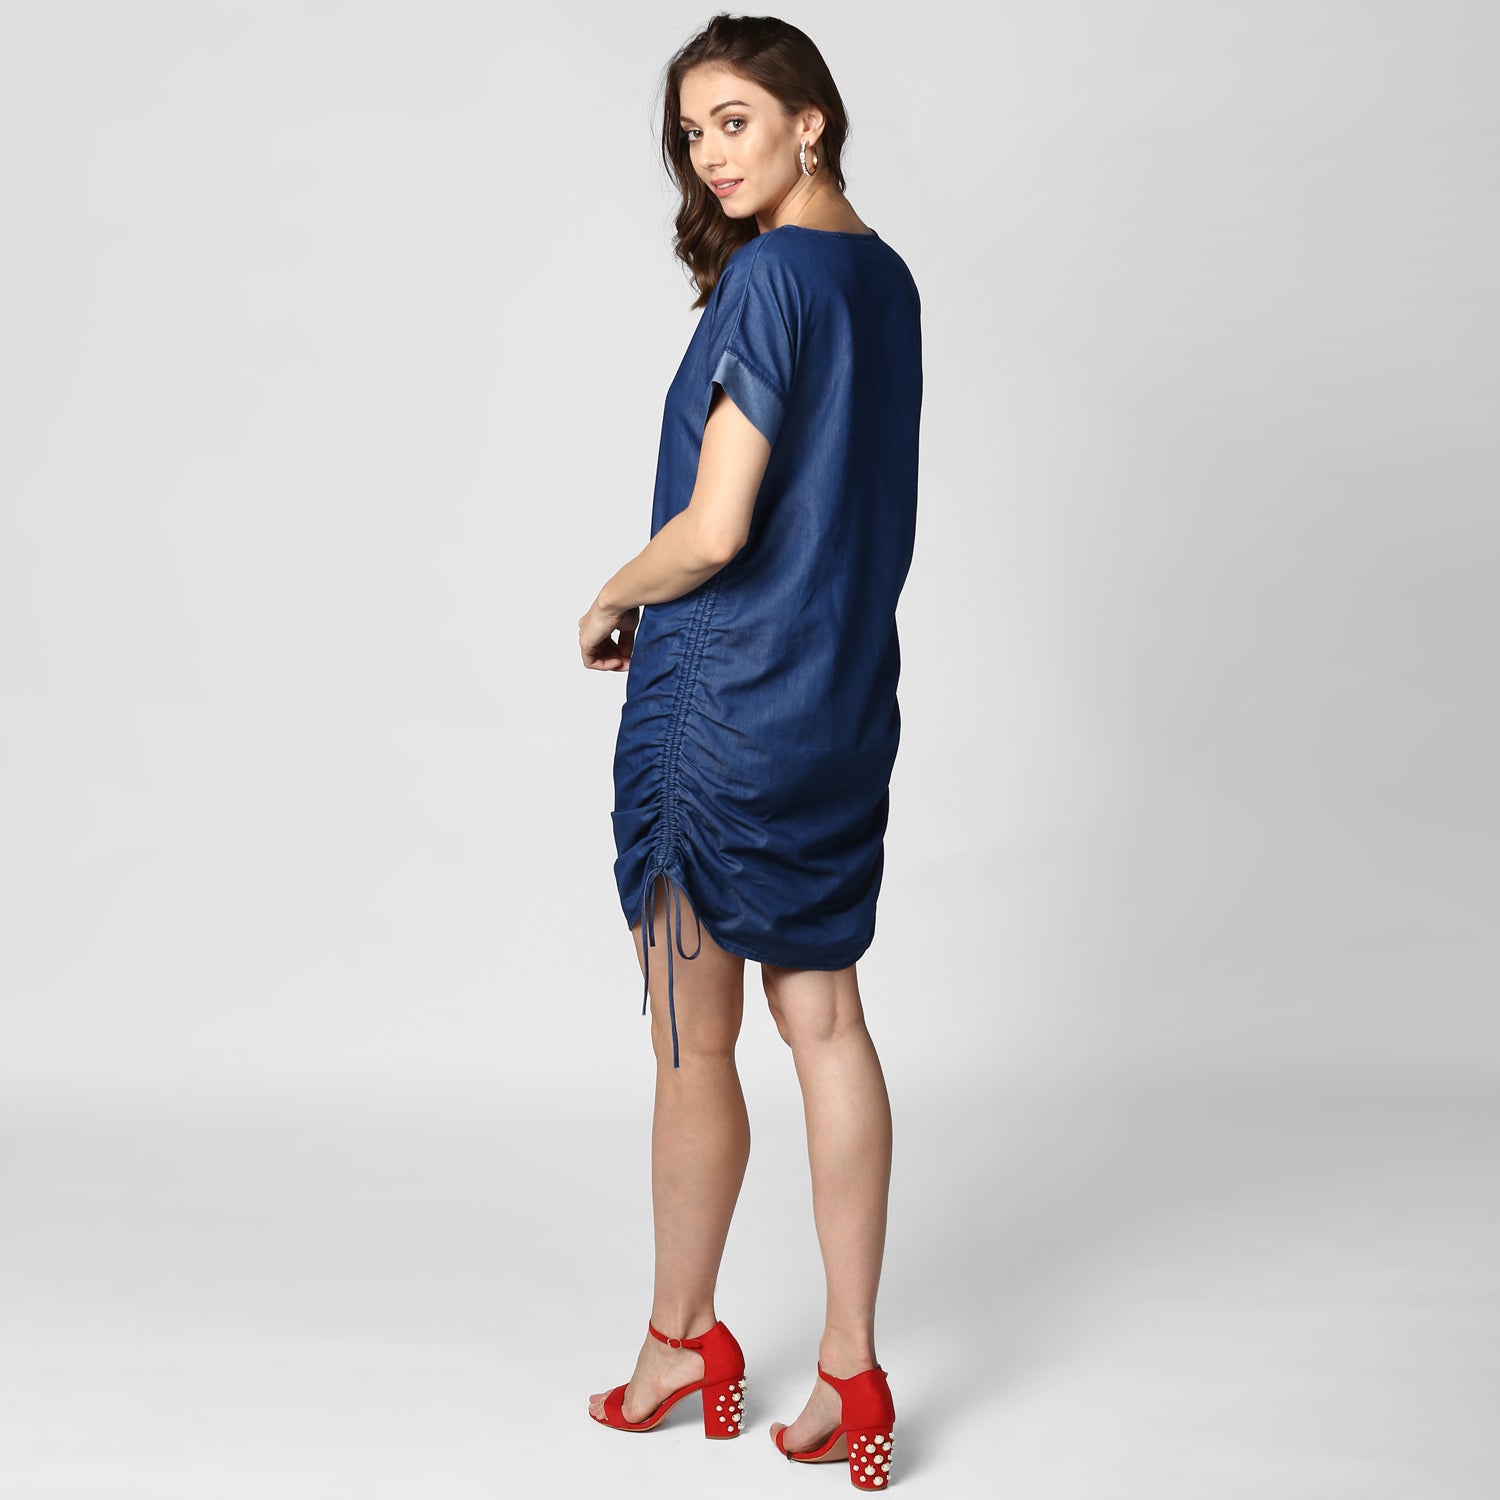 Women's Blue Denim String Adjustor Dress - StyleStone